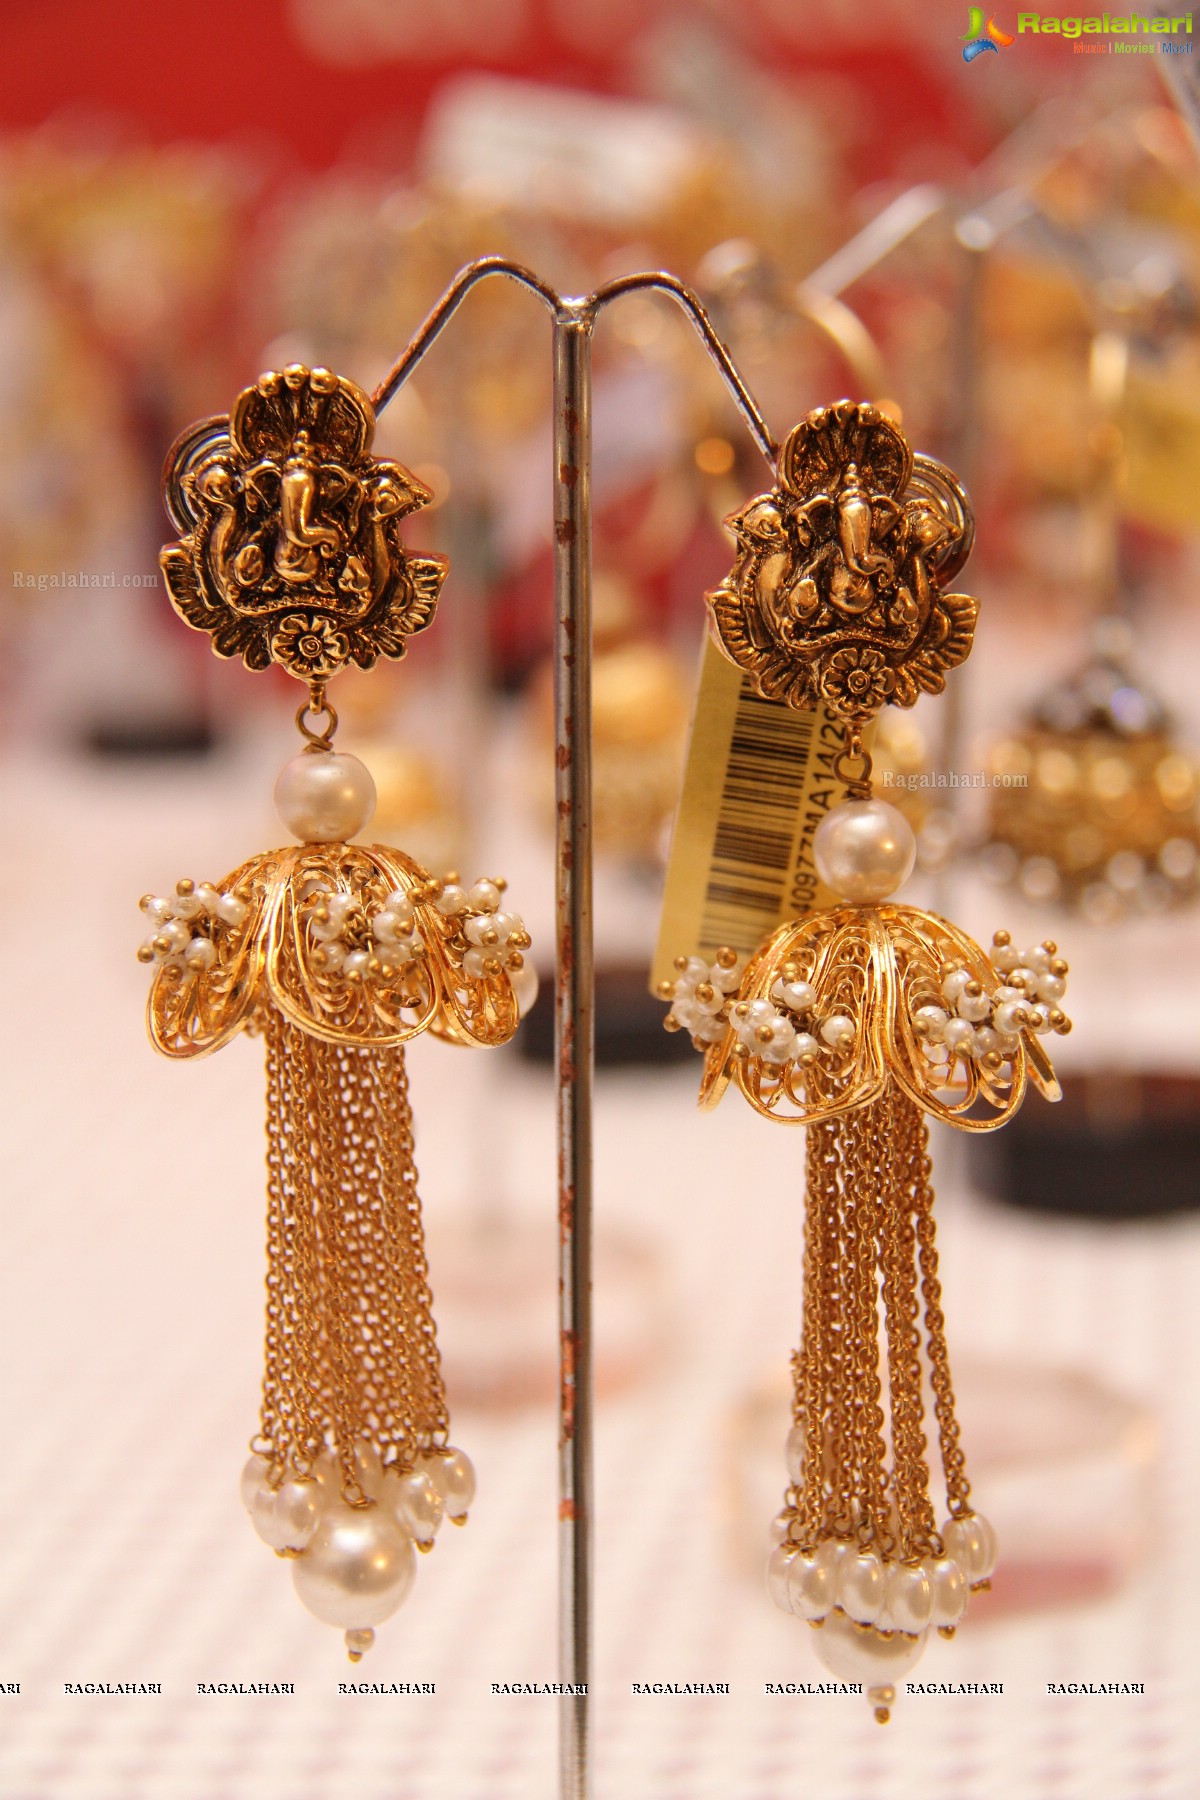 Art Karat 'Kanha' Jewellery Exhibition, Hyderabad